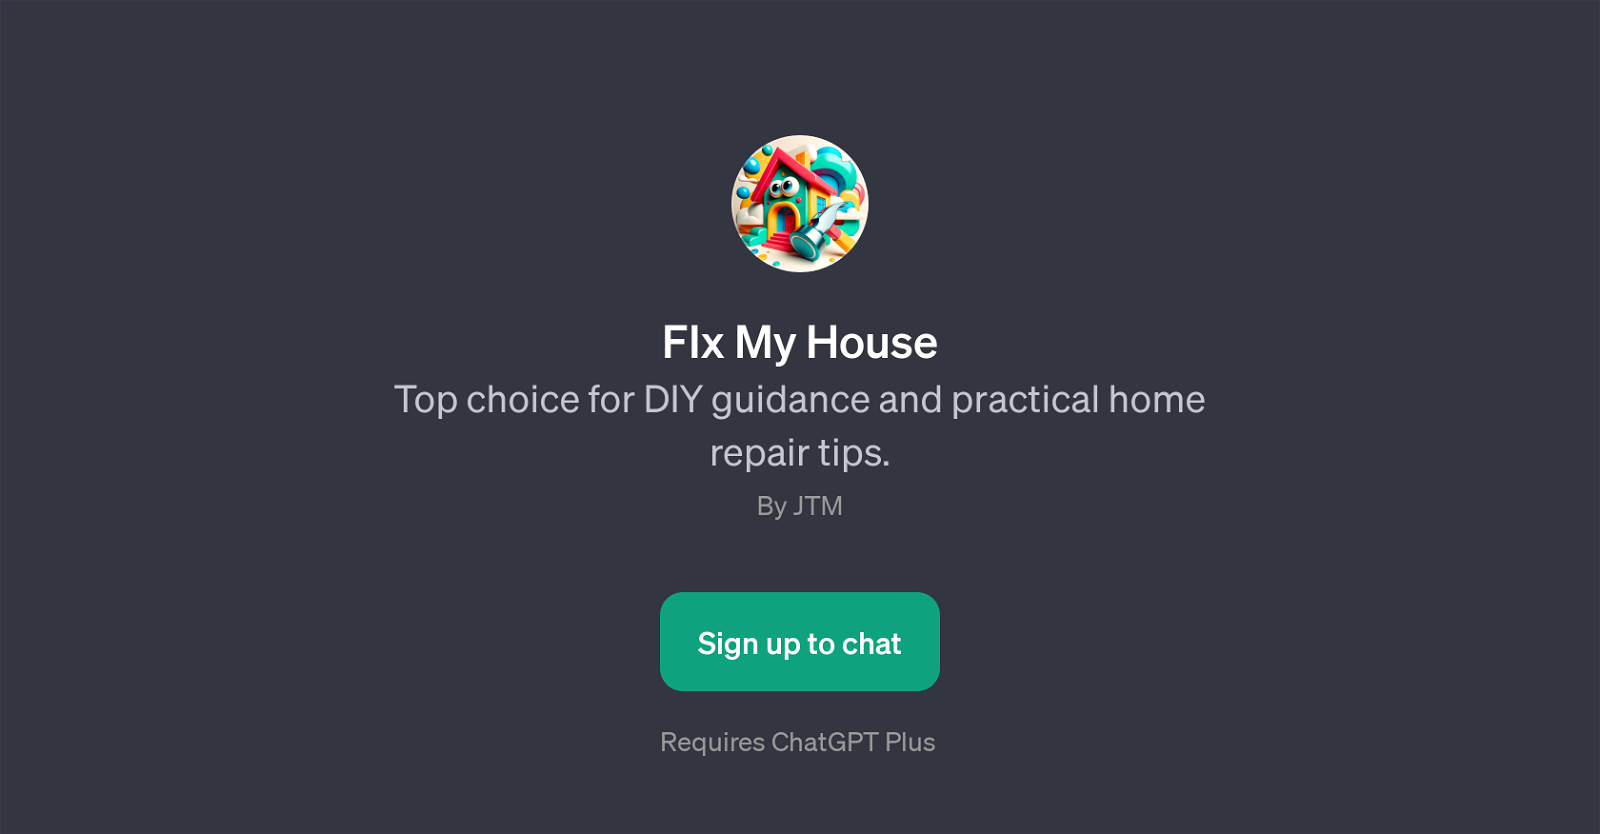 FIx My House website